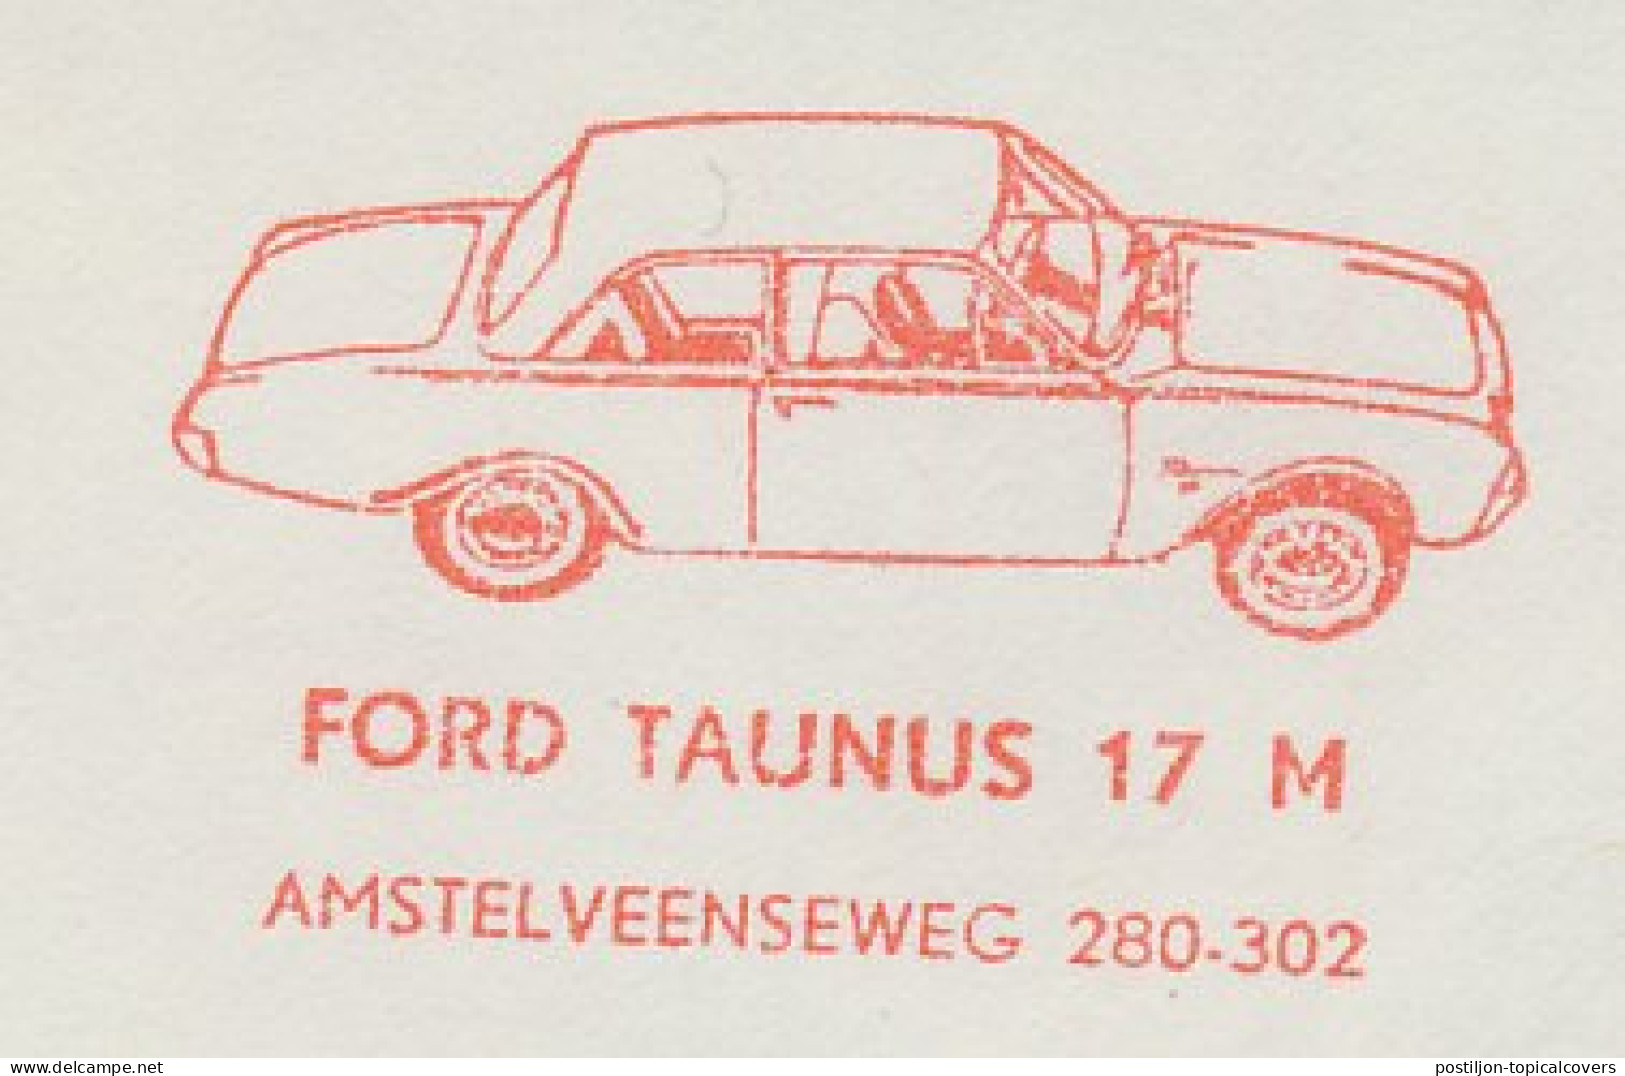 Meter Cut Netherlands 1963 Car - Ford Taunus 17 M - Voitures